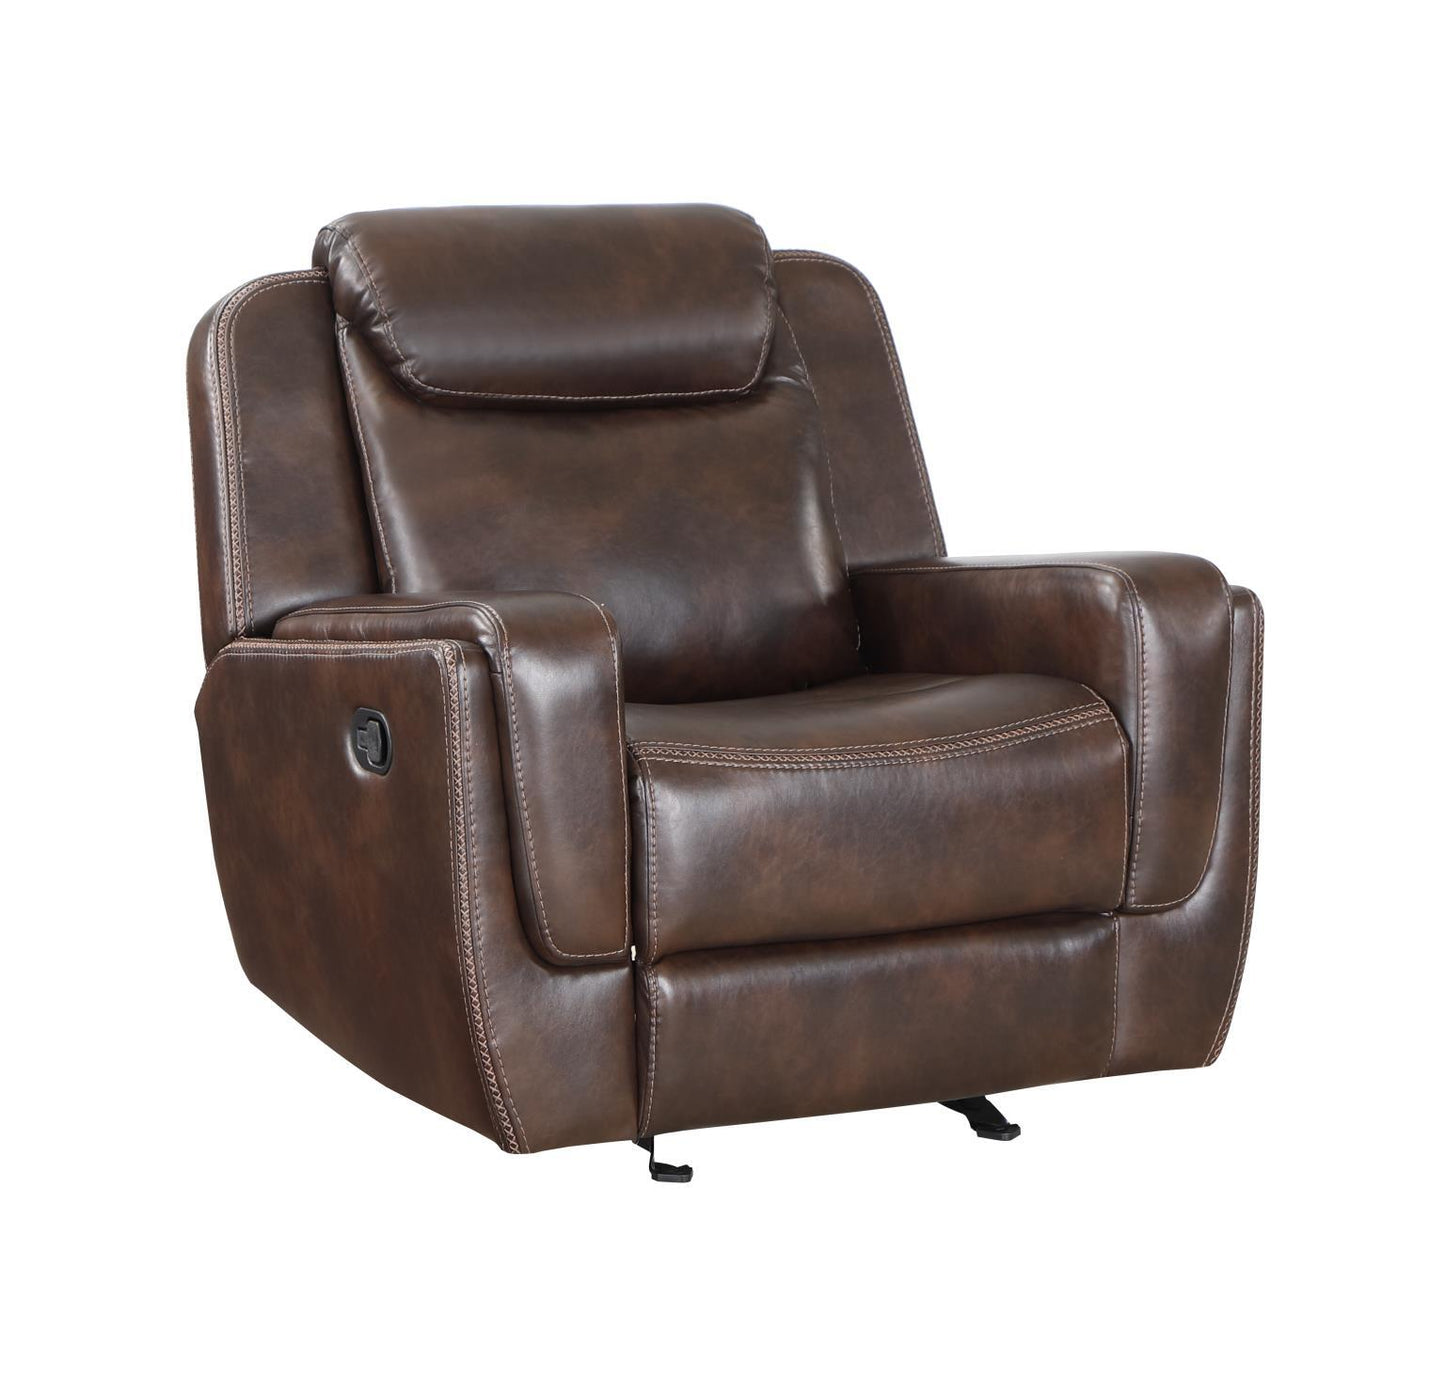 ASPEN 1 Seater Reclining Chair Brown